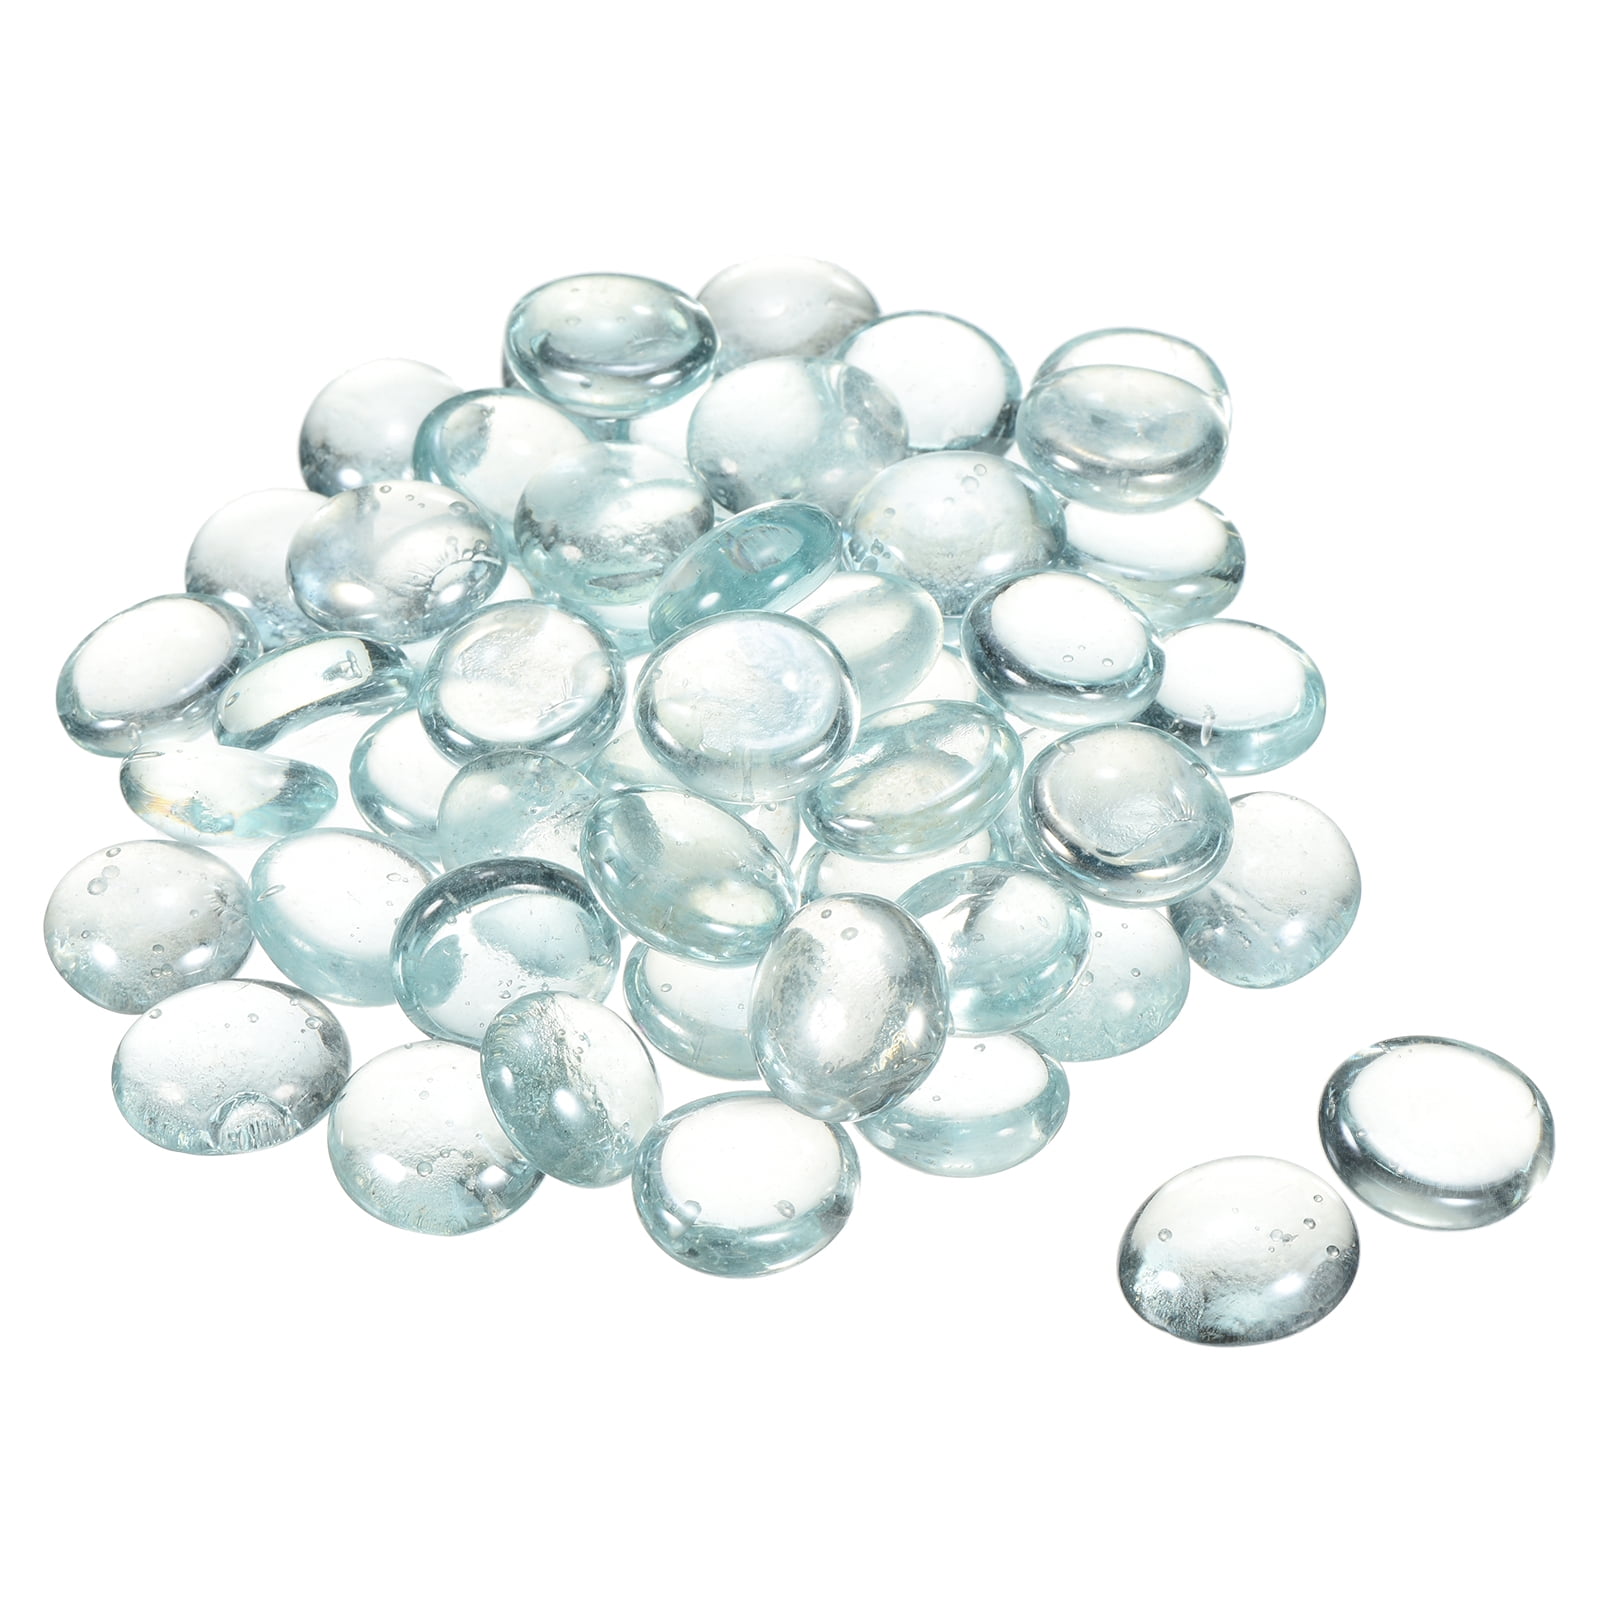 Transparent Aqua Flat Glass Marbles for Vases, Bulk 17 LB Decorative Beads  for Vase Fillers, Crafts, Table Scatter, Fish Tanks, Party Centerpieces,  Gem Décor, M…